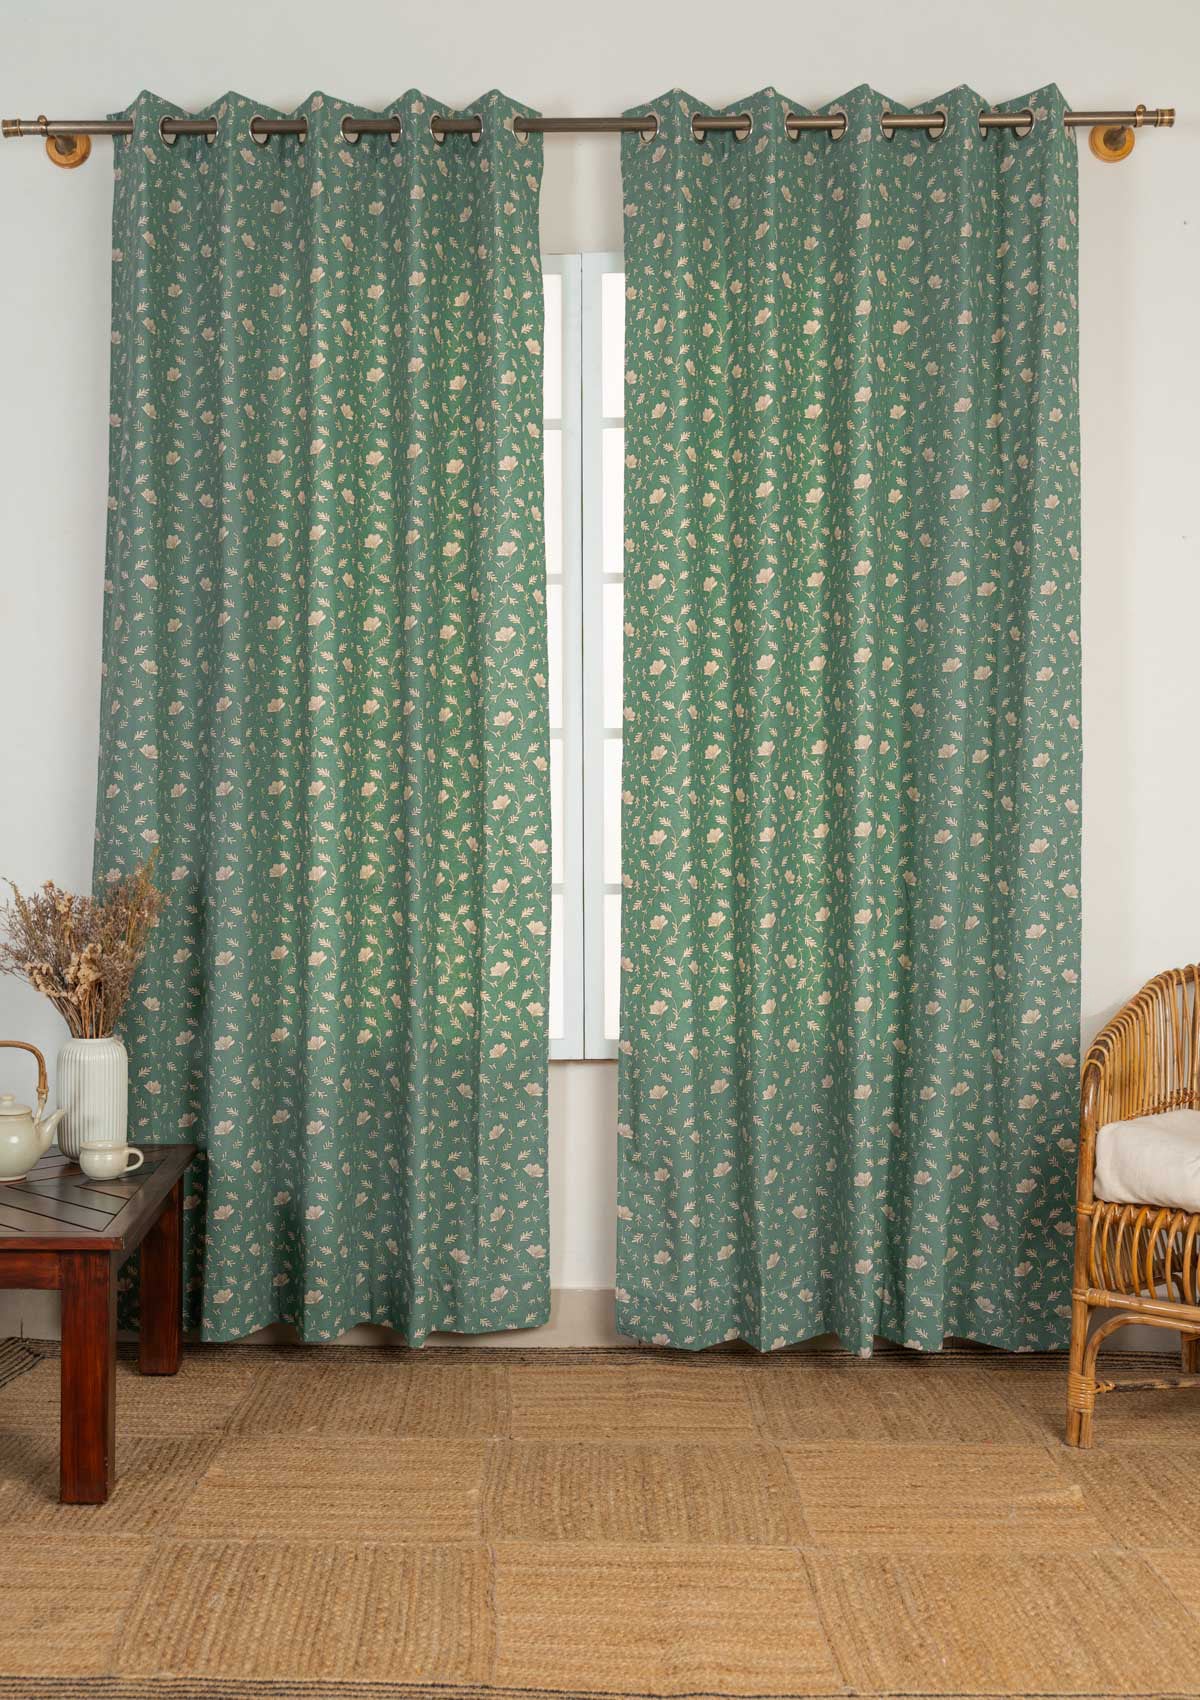 Eden aqua blue 100% cotton floral curtain for bed room - Room darkening - Single